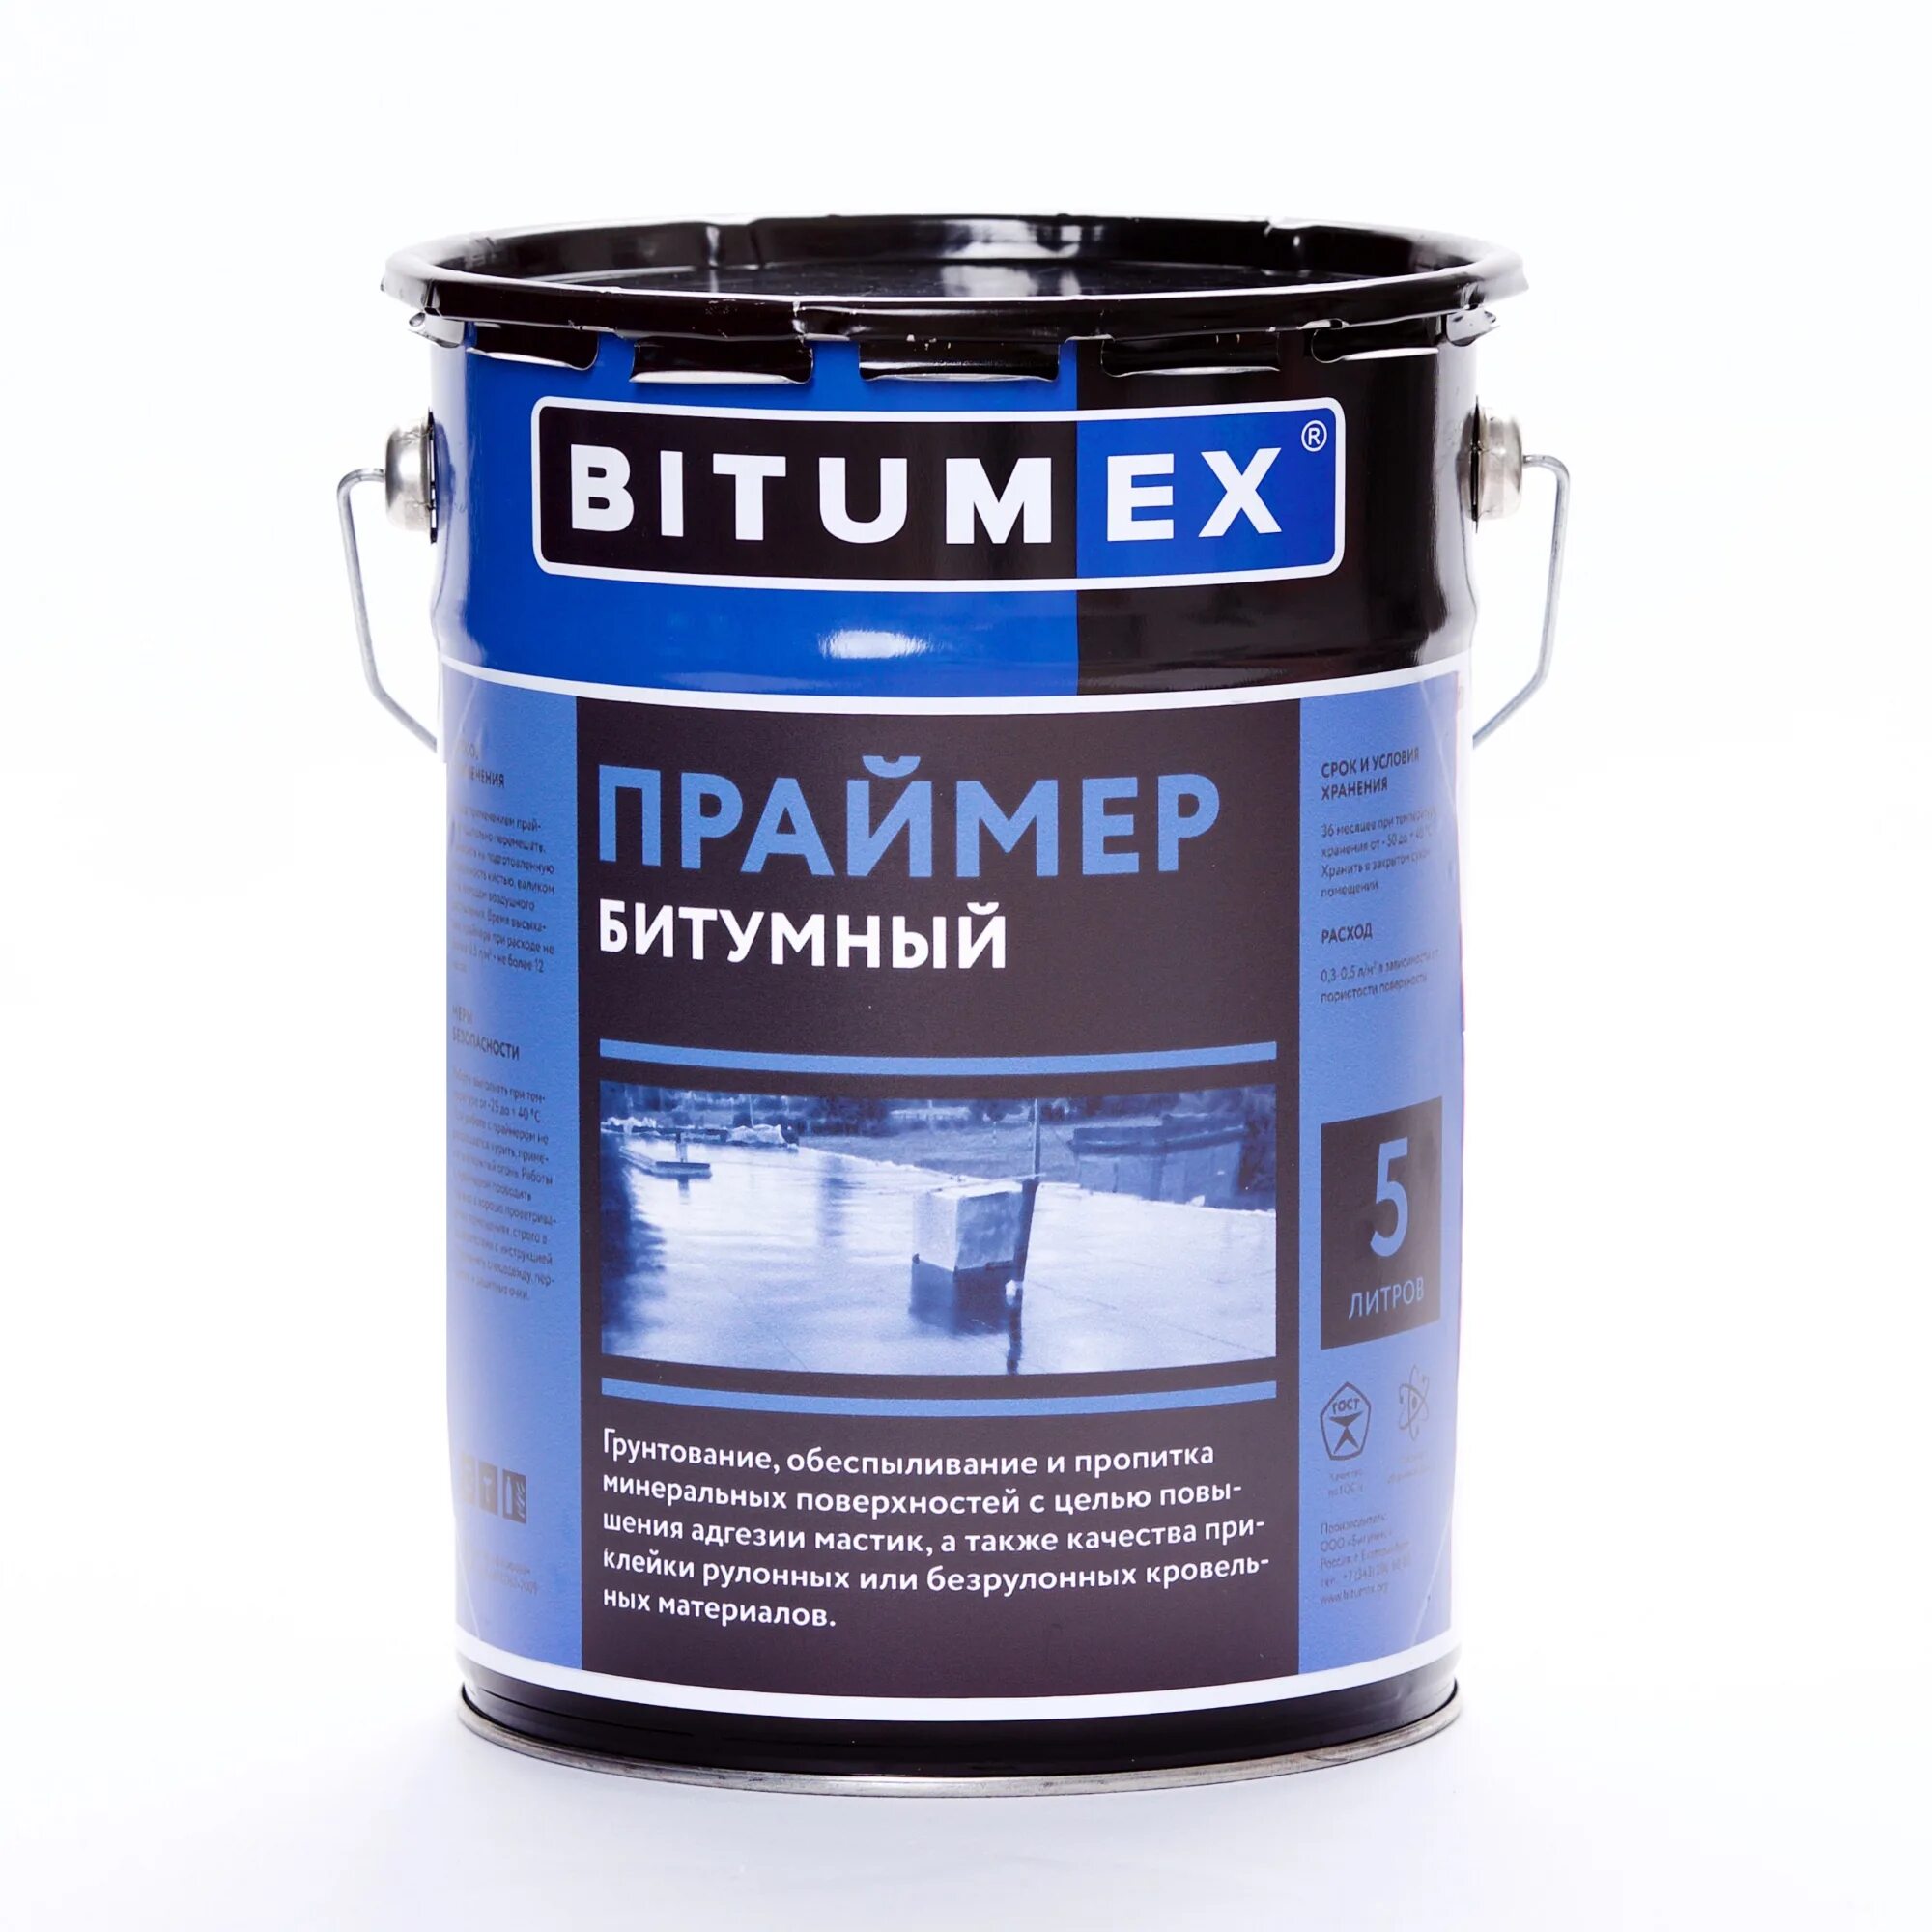 Праймер BITUMEX битумный 5л. Праймер битумный BITUMEX эконом, 21,5л. Мастика битумная гидроизоляционная BITUMEX эконом, 22кг. Праймер битумный SMARTMIX 5л..